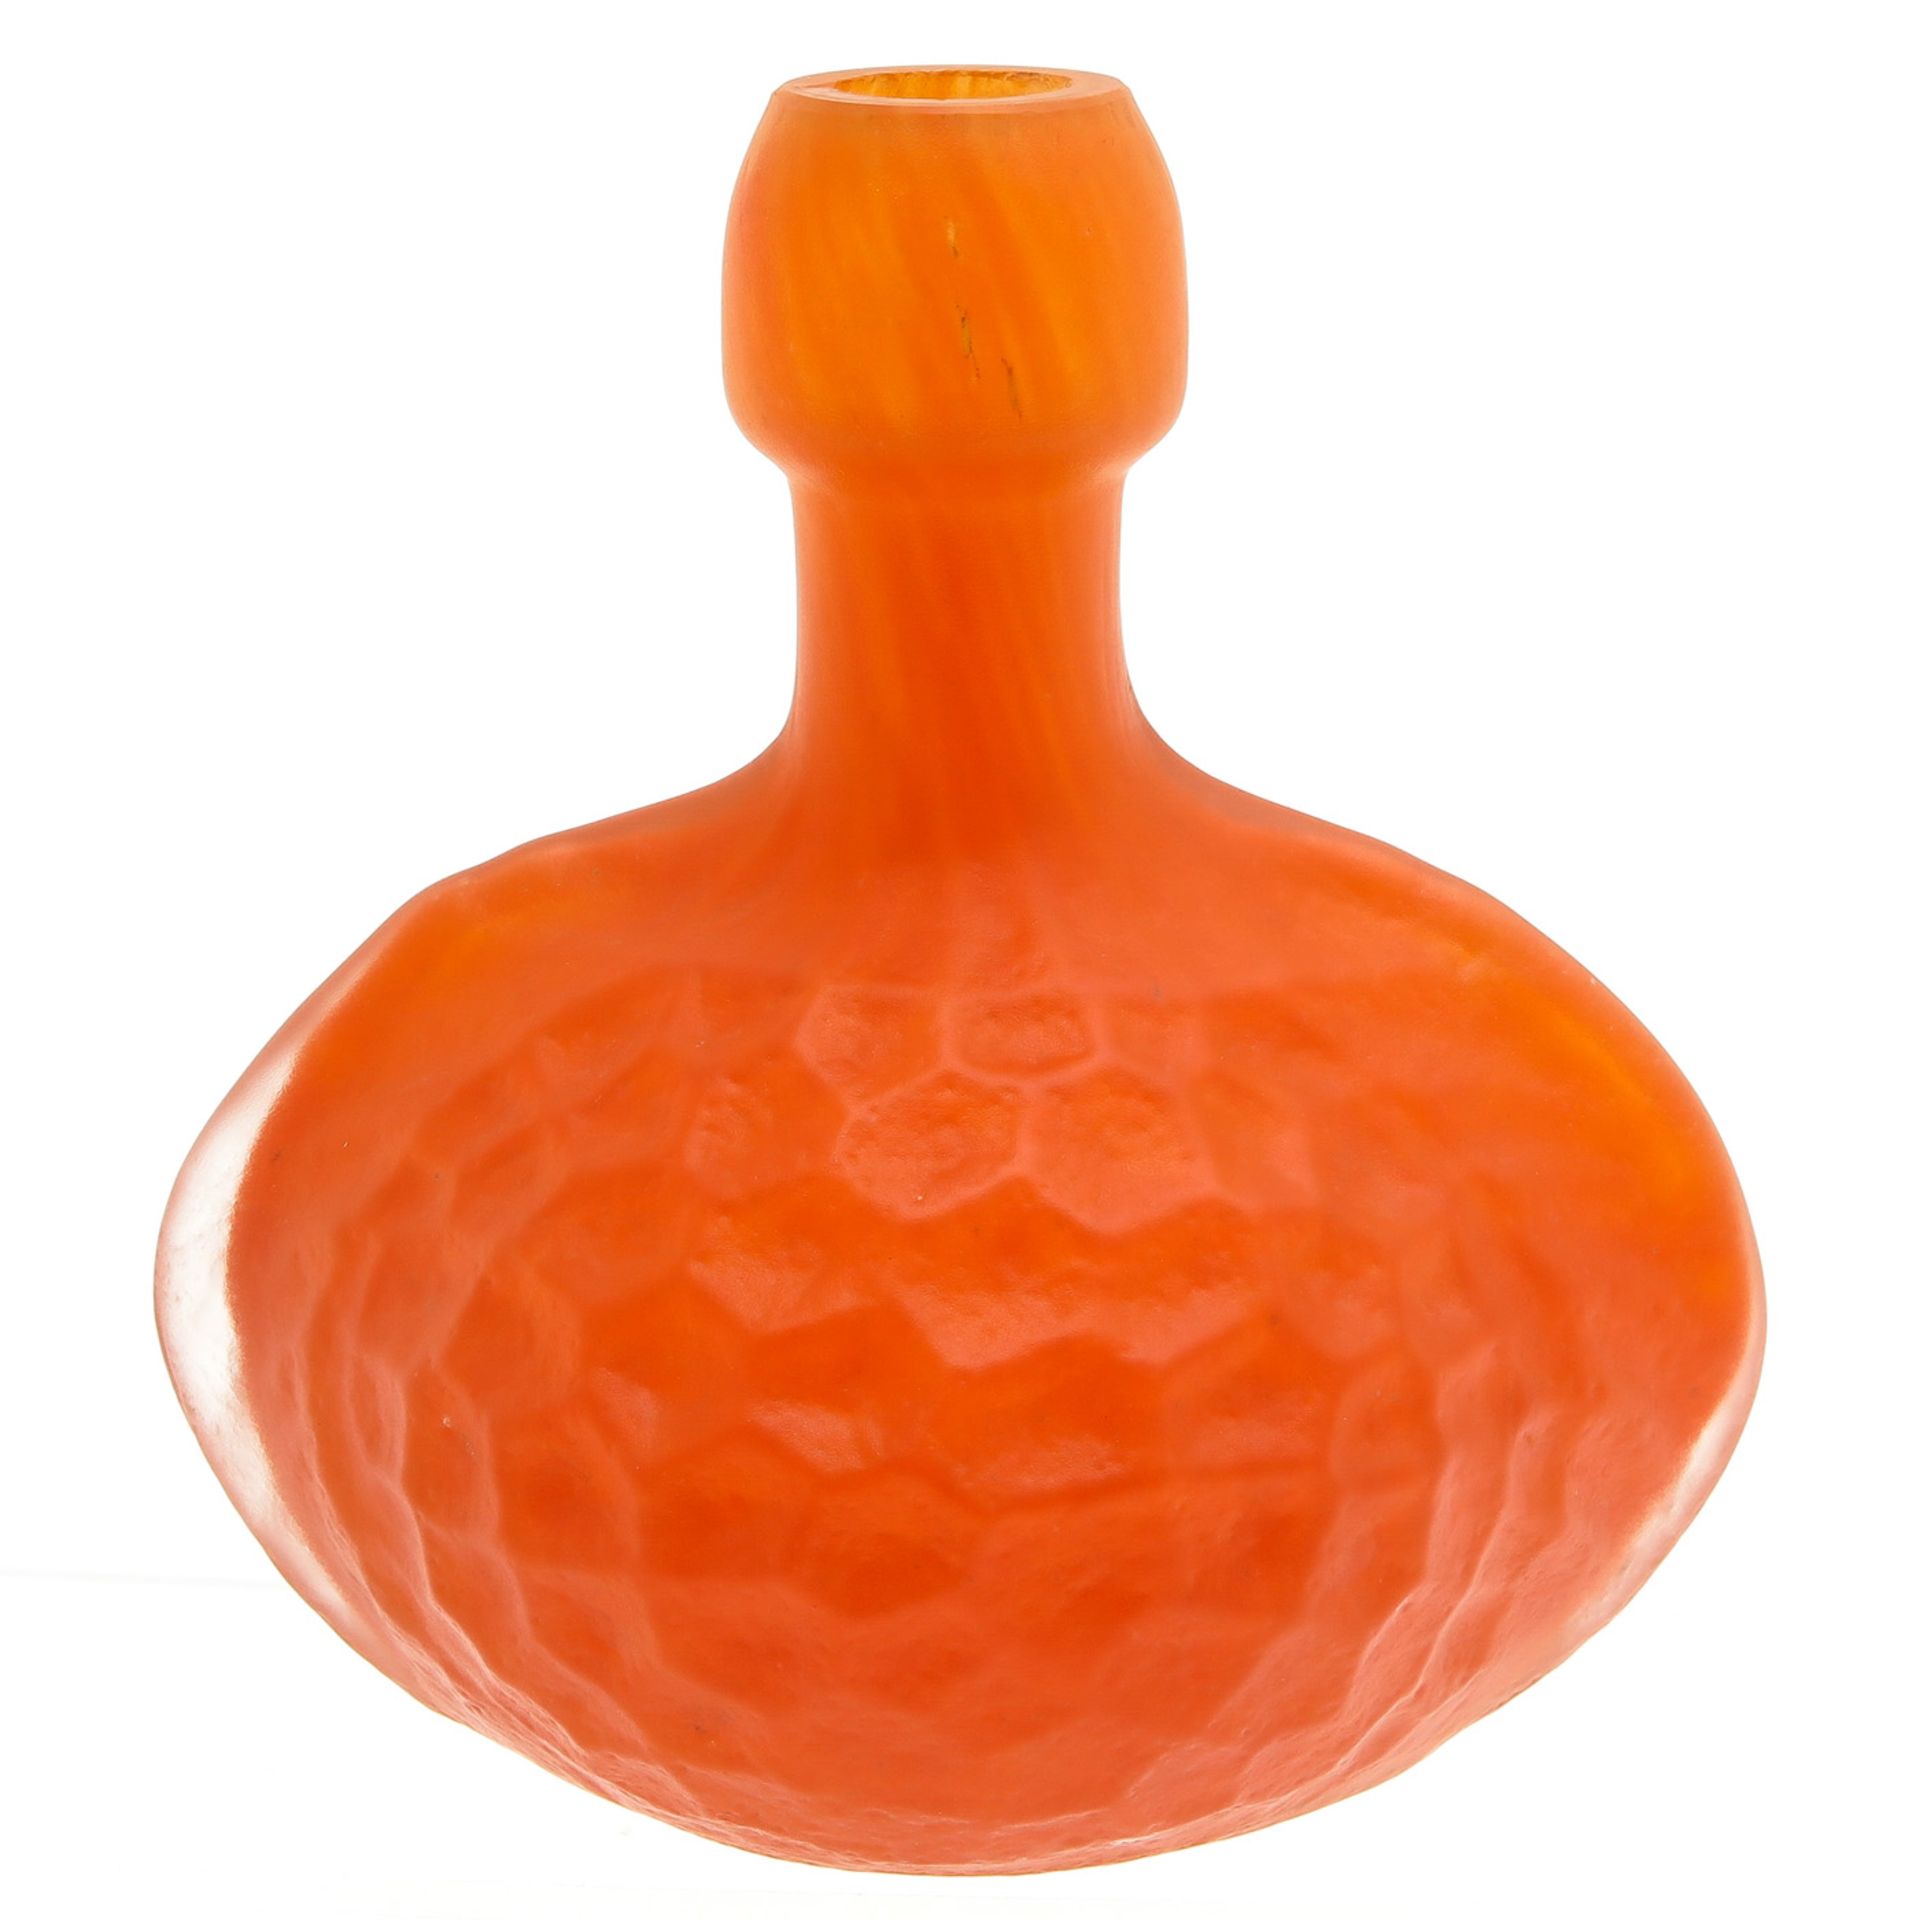 An Orange Glass Vase